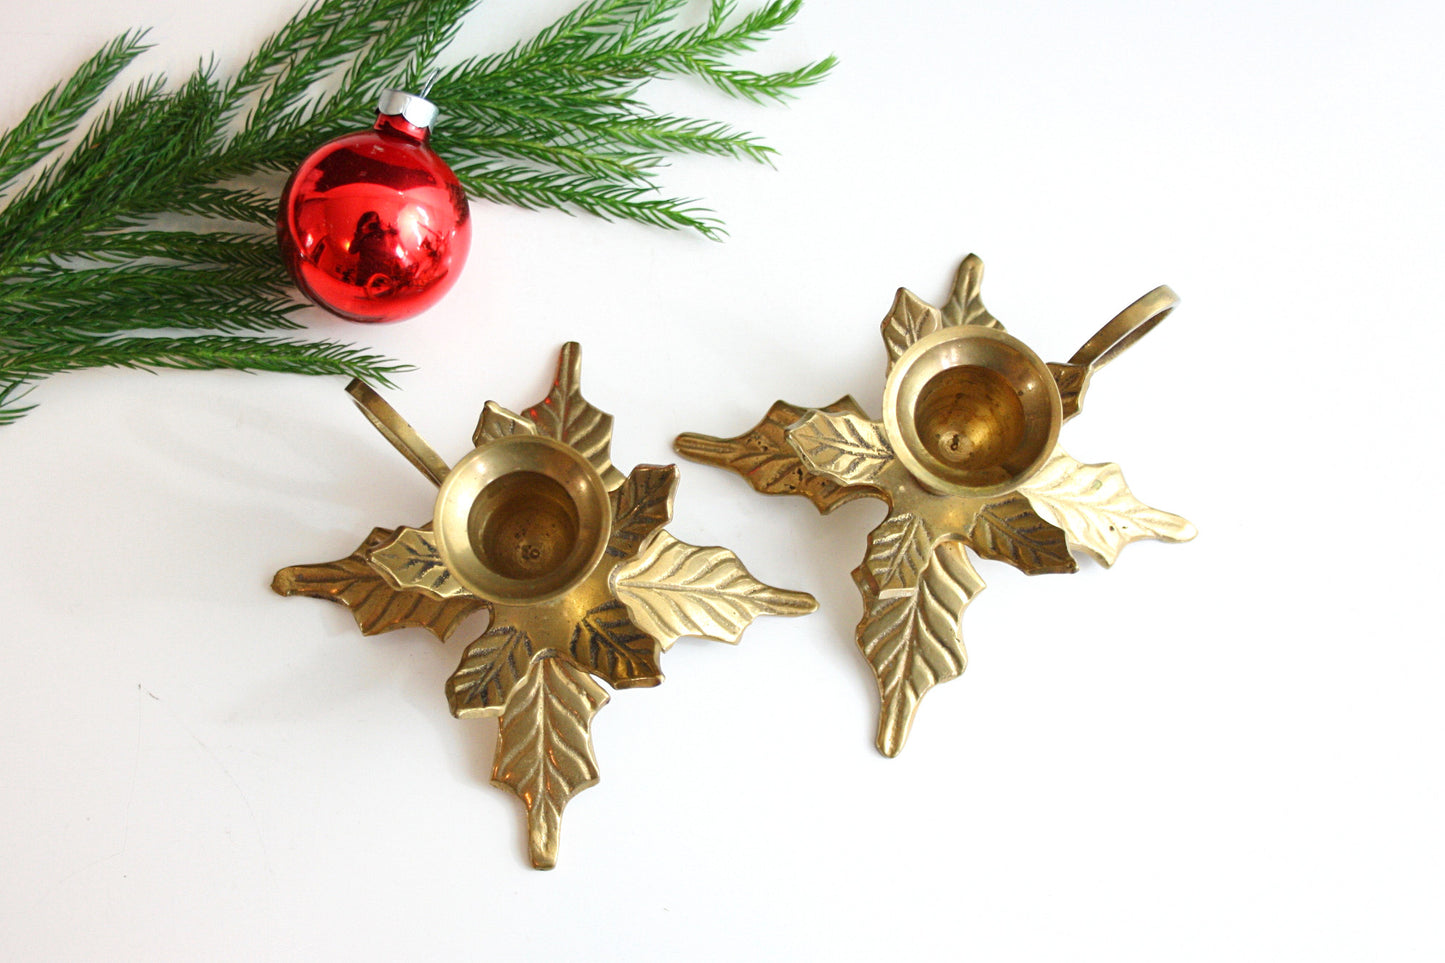 SOLD - Mid Century Brass Leaves Candlesticks / Vintage Brass Christmas Candlesticks